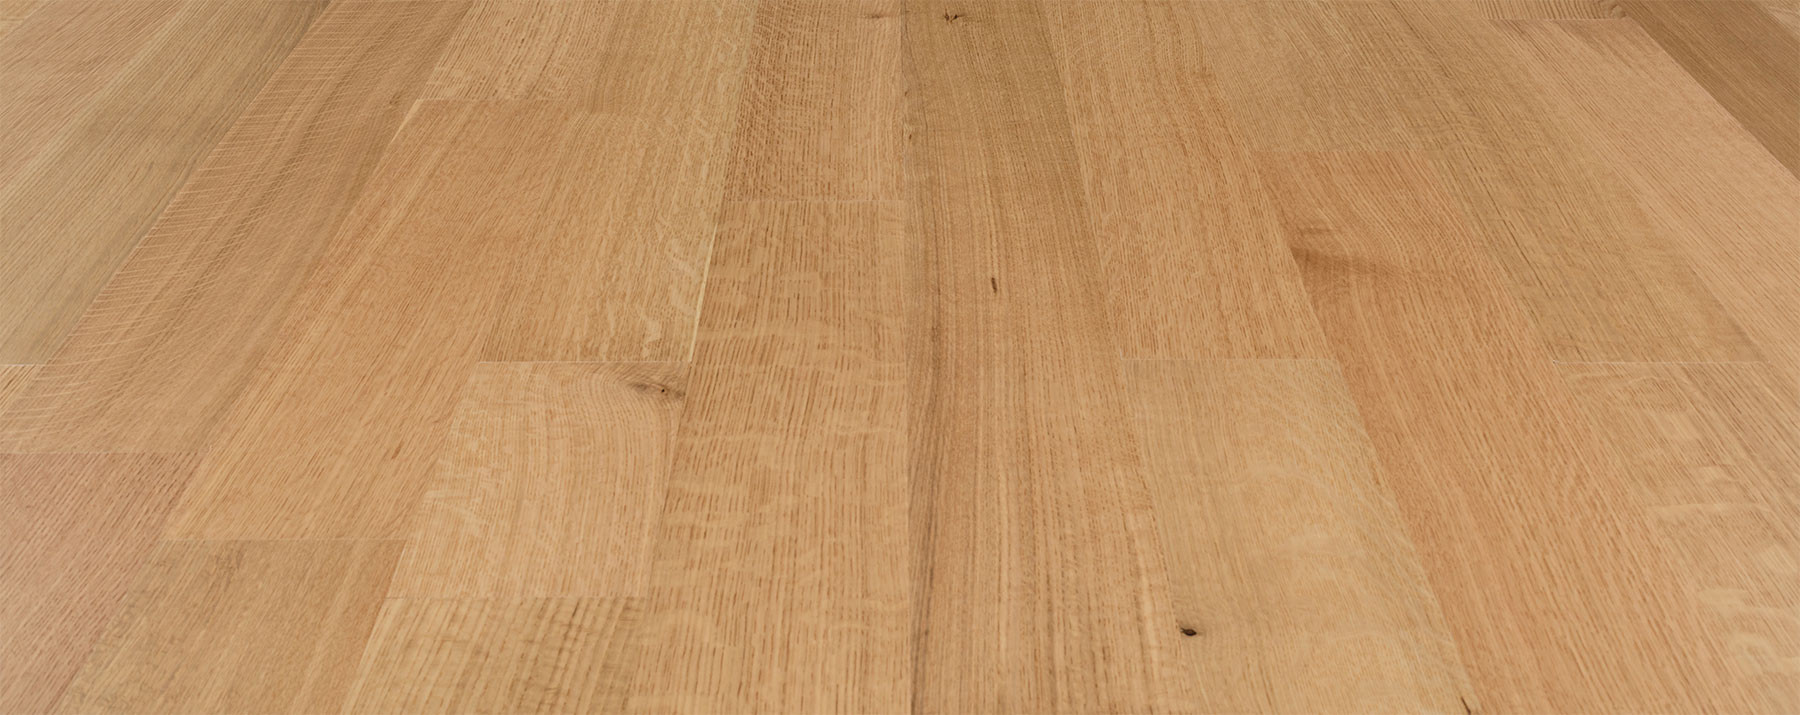 22 Elegant Grades Of Oak Hardwood Flooring 2024 free download grades of oak hardwood flooring of american quartered white oak 5e280b3 etx surfaces pertaining to etx surfaces american quartered white oak wood flooring